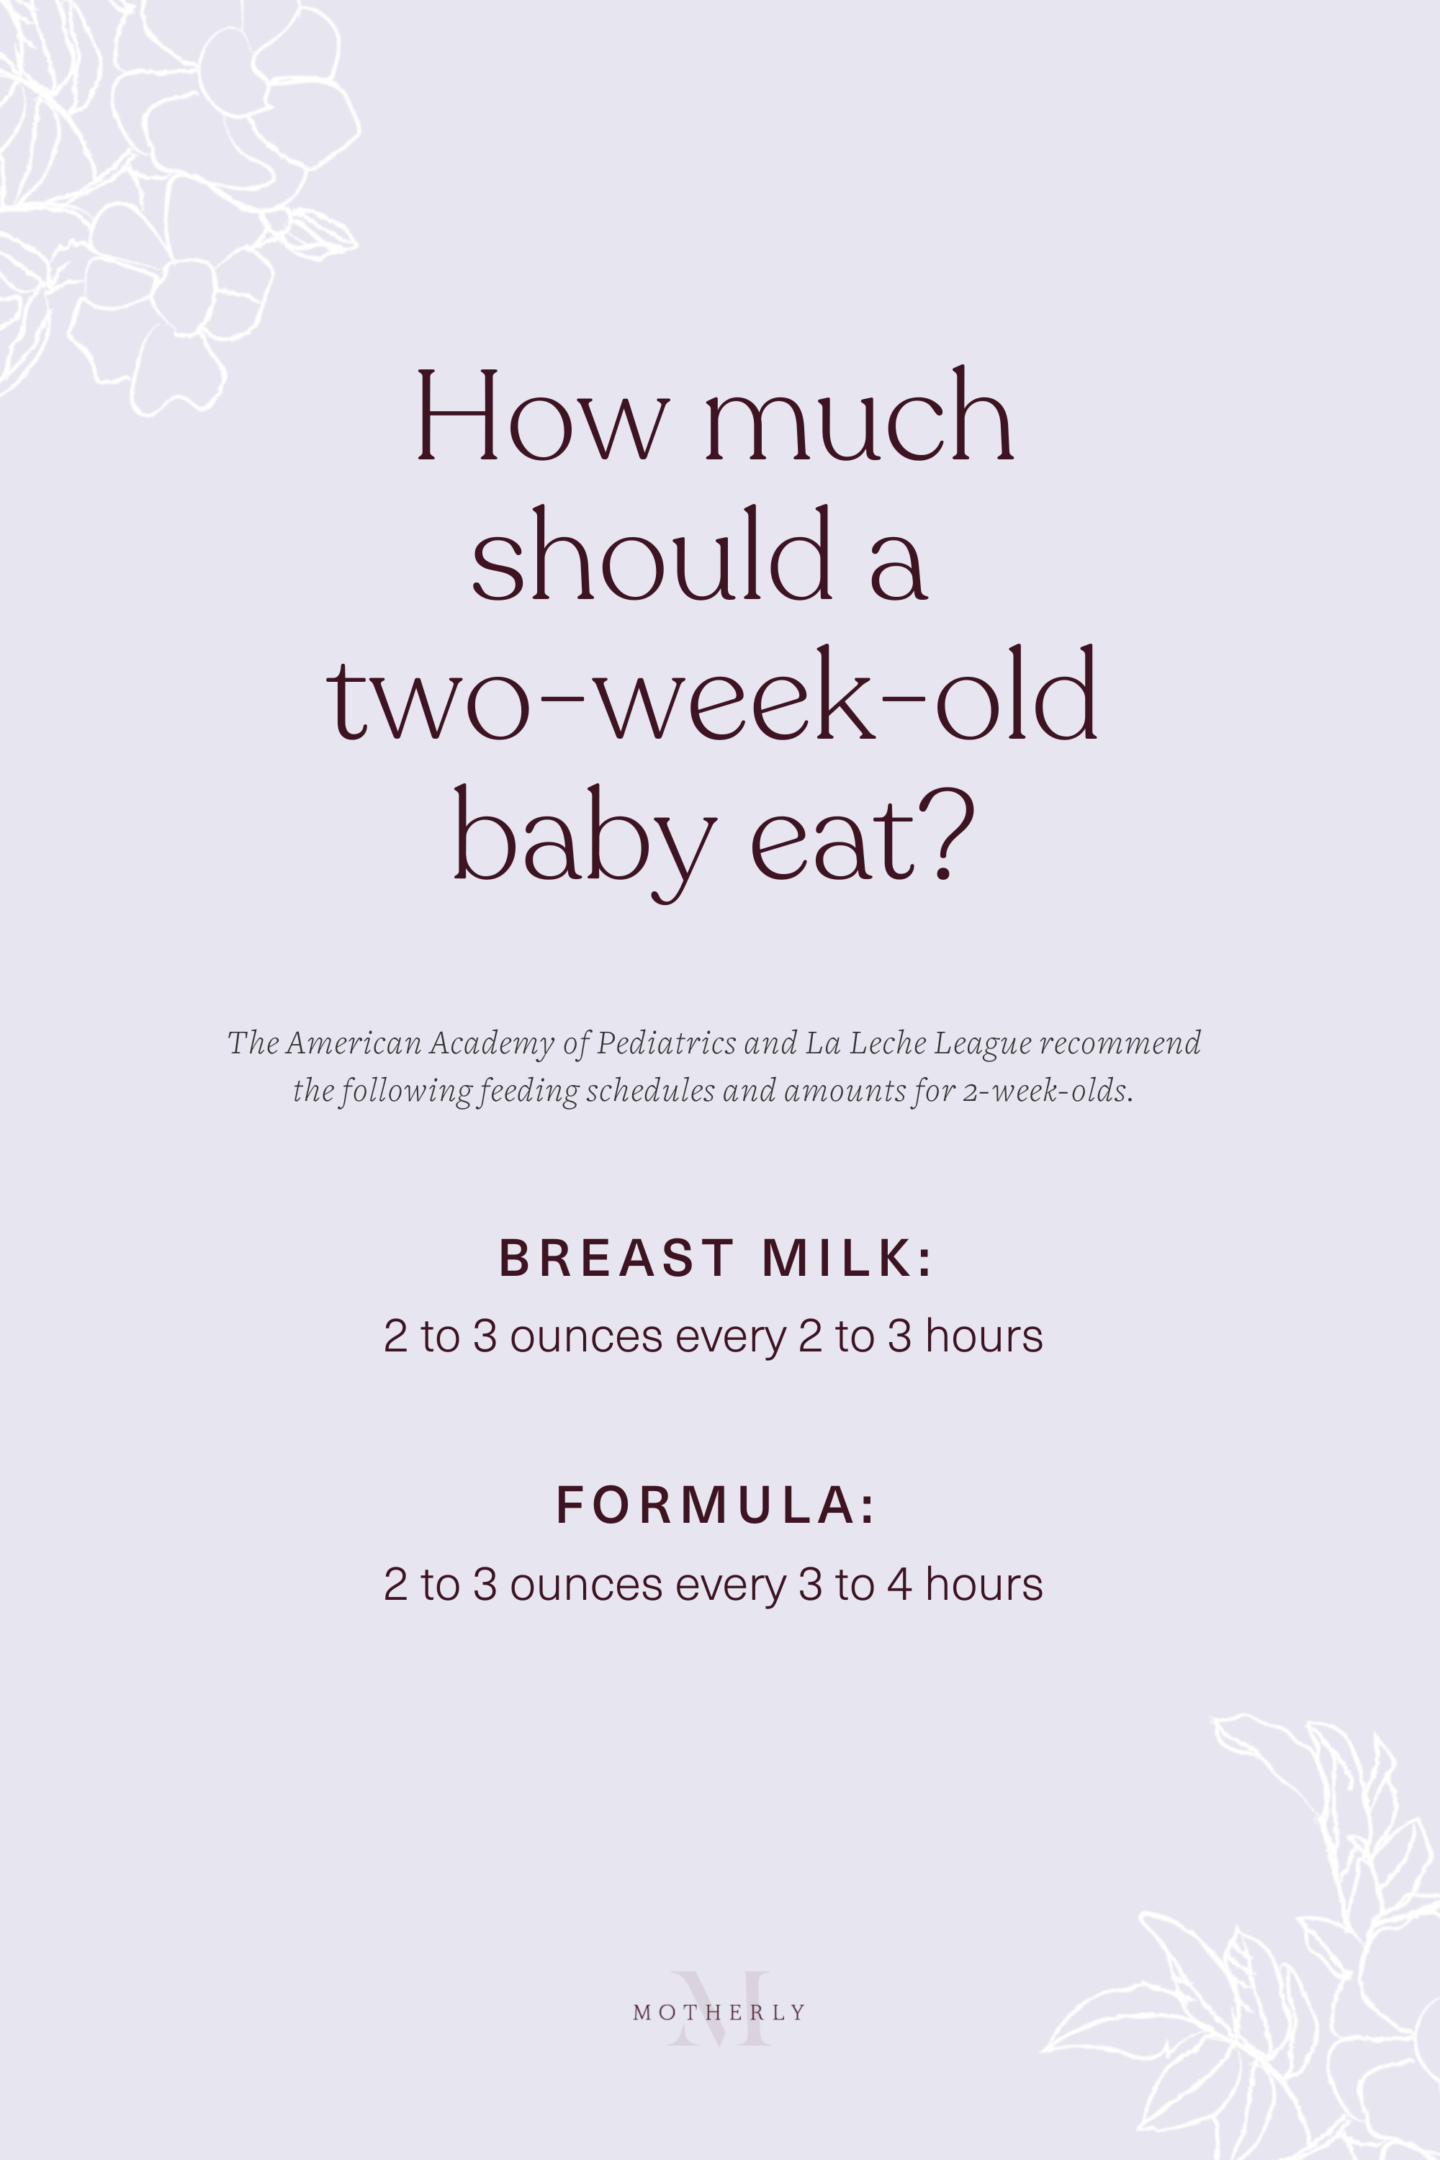 printable summary of 2-week-old baby feeding schedule - breast milk and formula